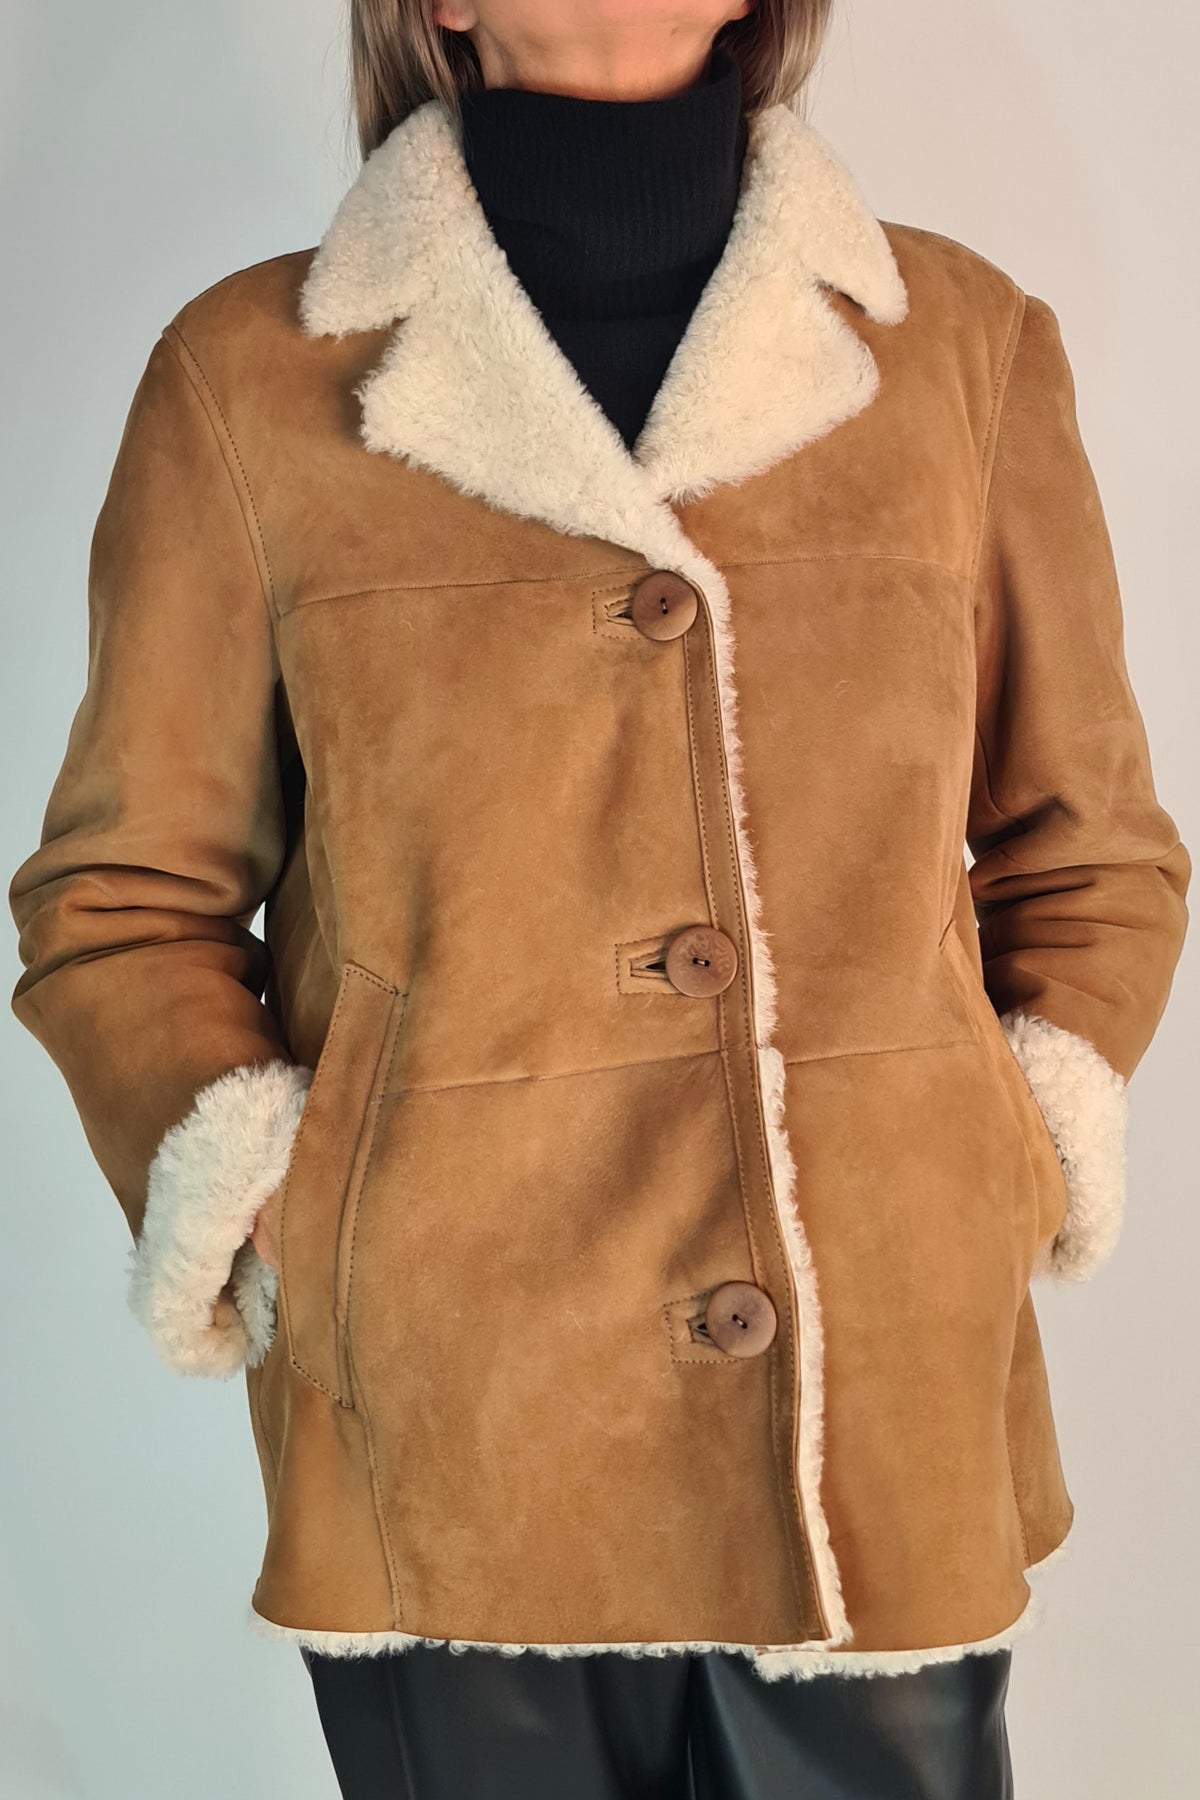 Gimo's soft Nappa sheepskin jacket